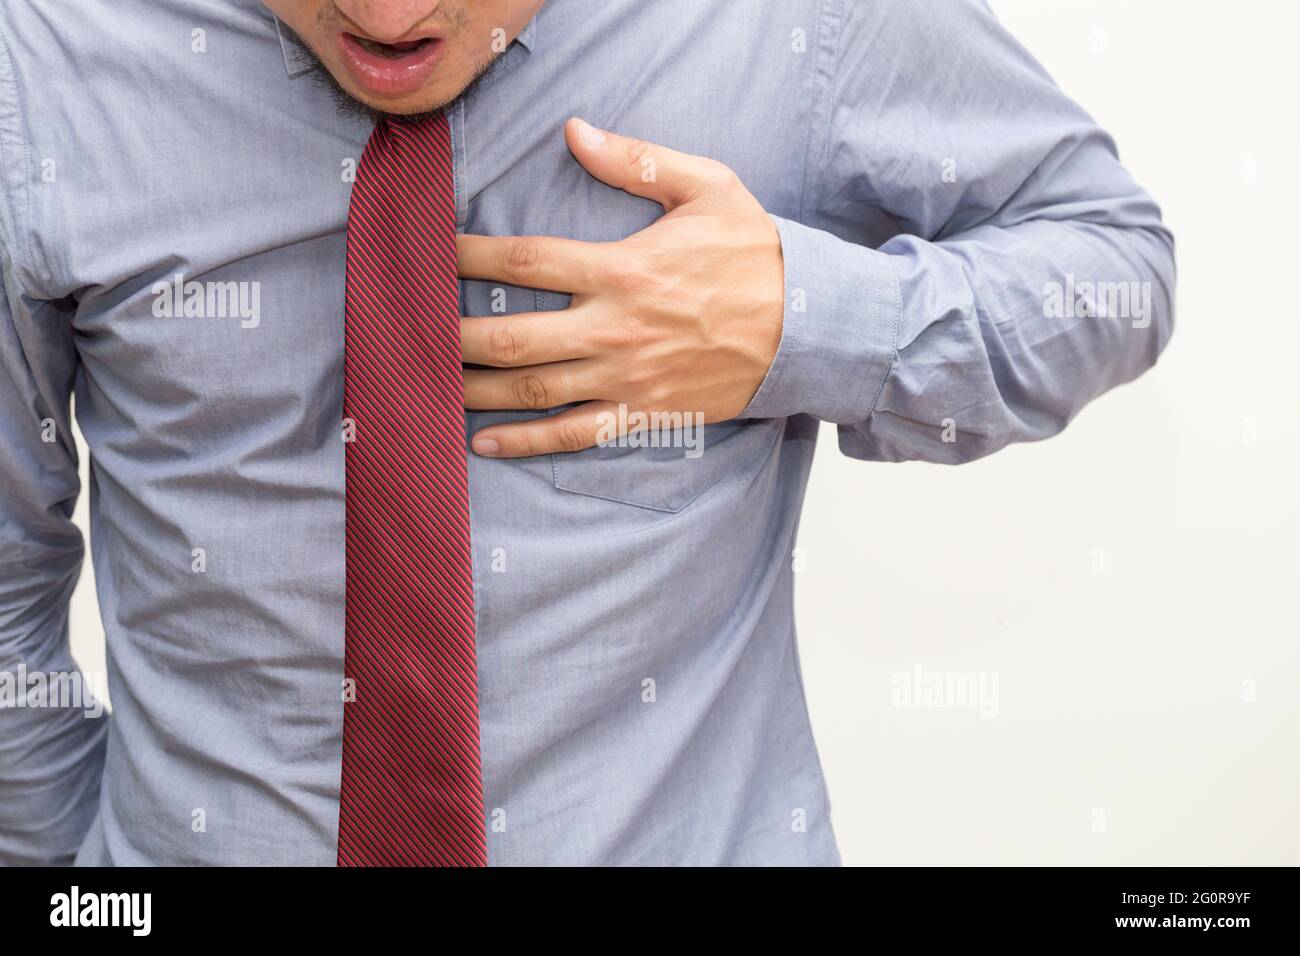 Symptoms of Heart Disease Stock Photo